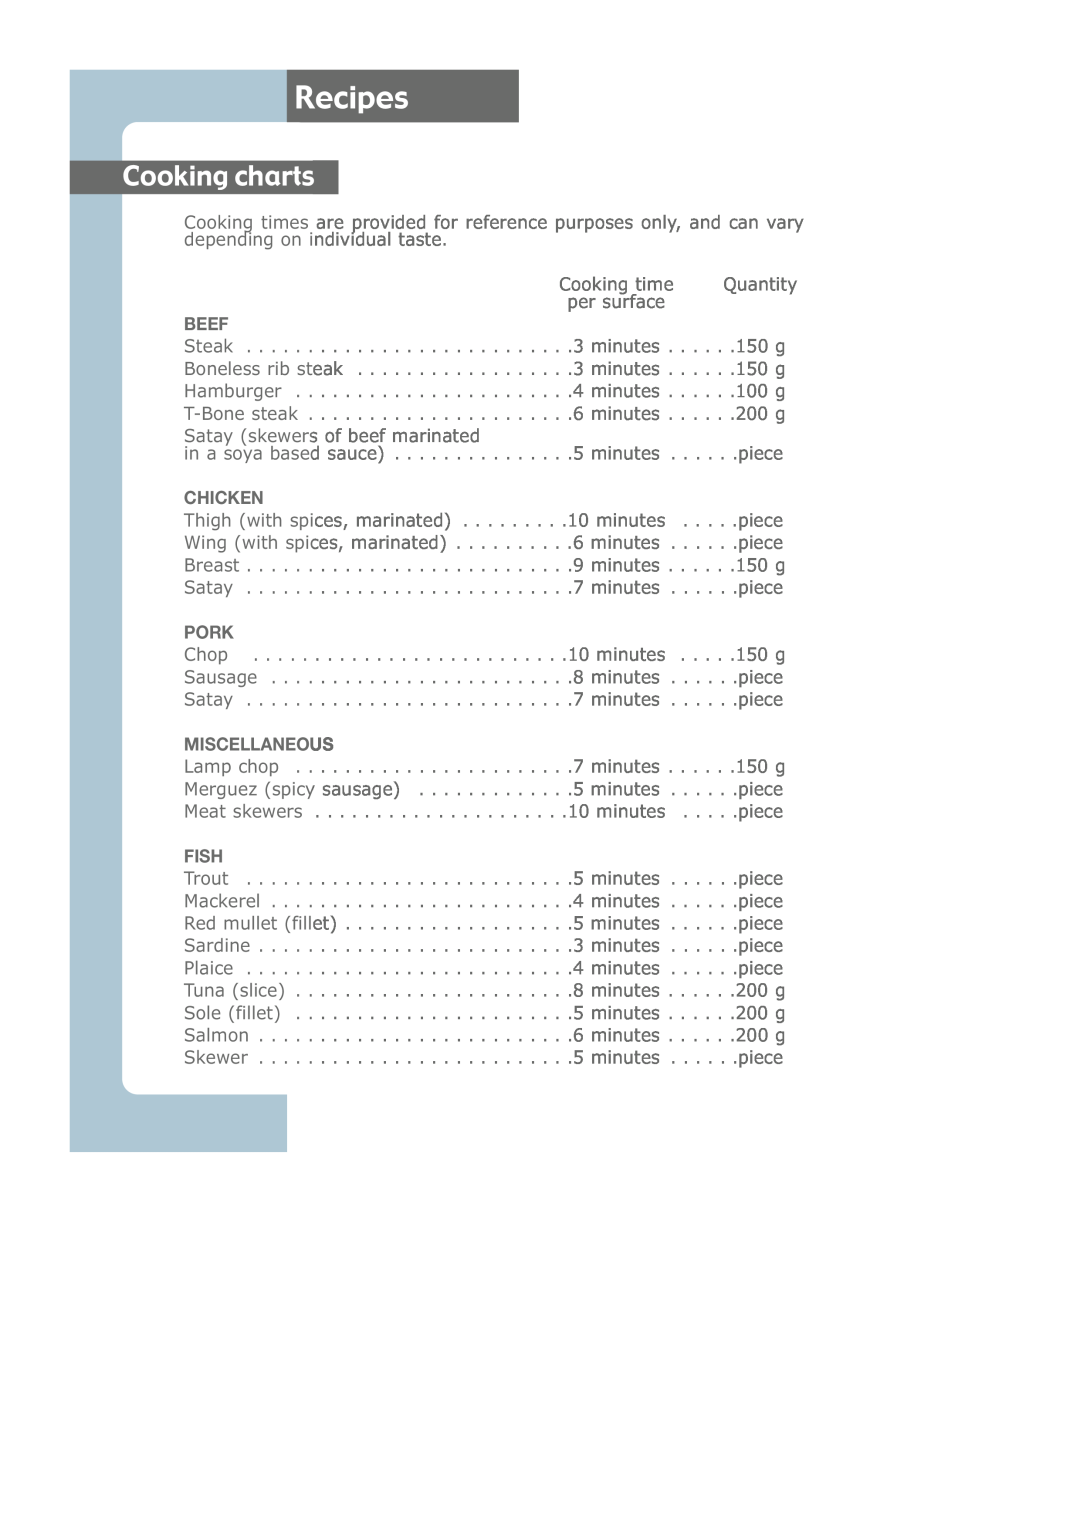 Groupe SEB USA - T-FAL CB6010 manual Recipes, Cooking charts, Quantity, per surface 